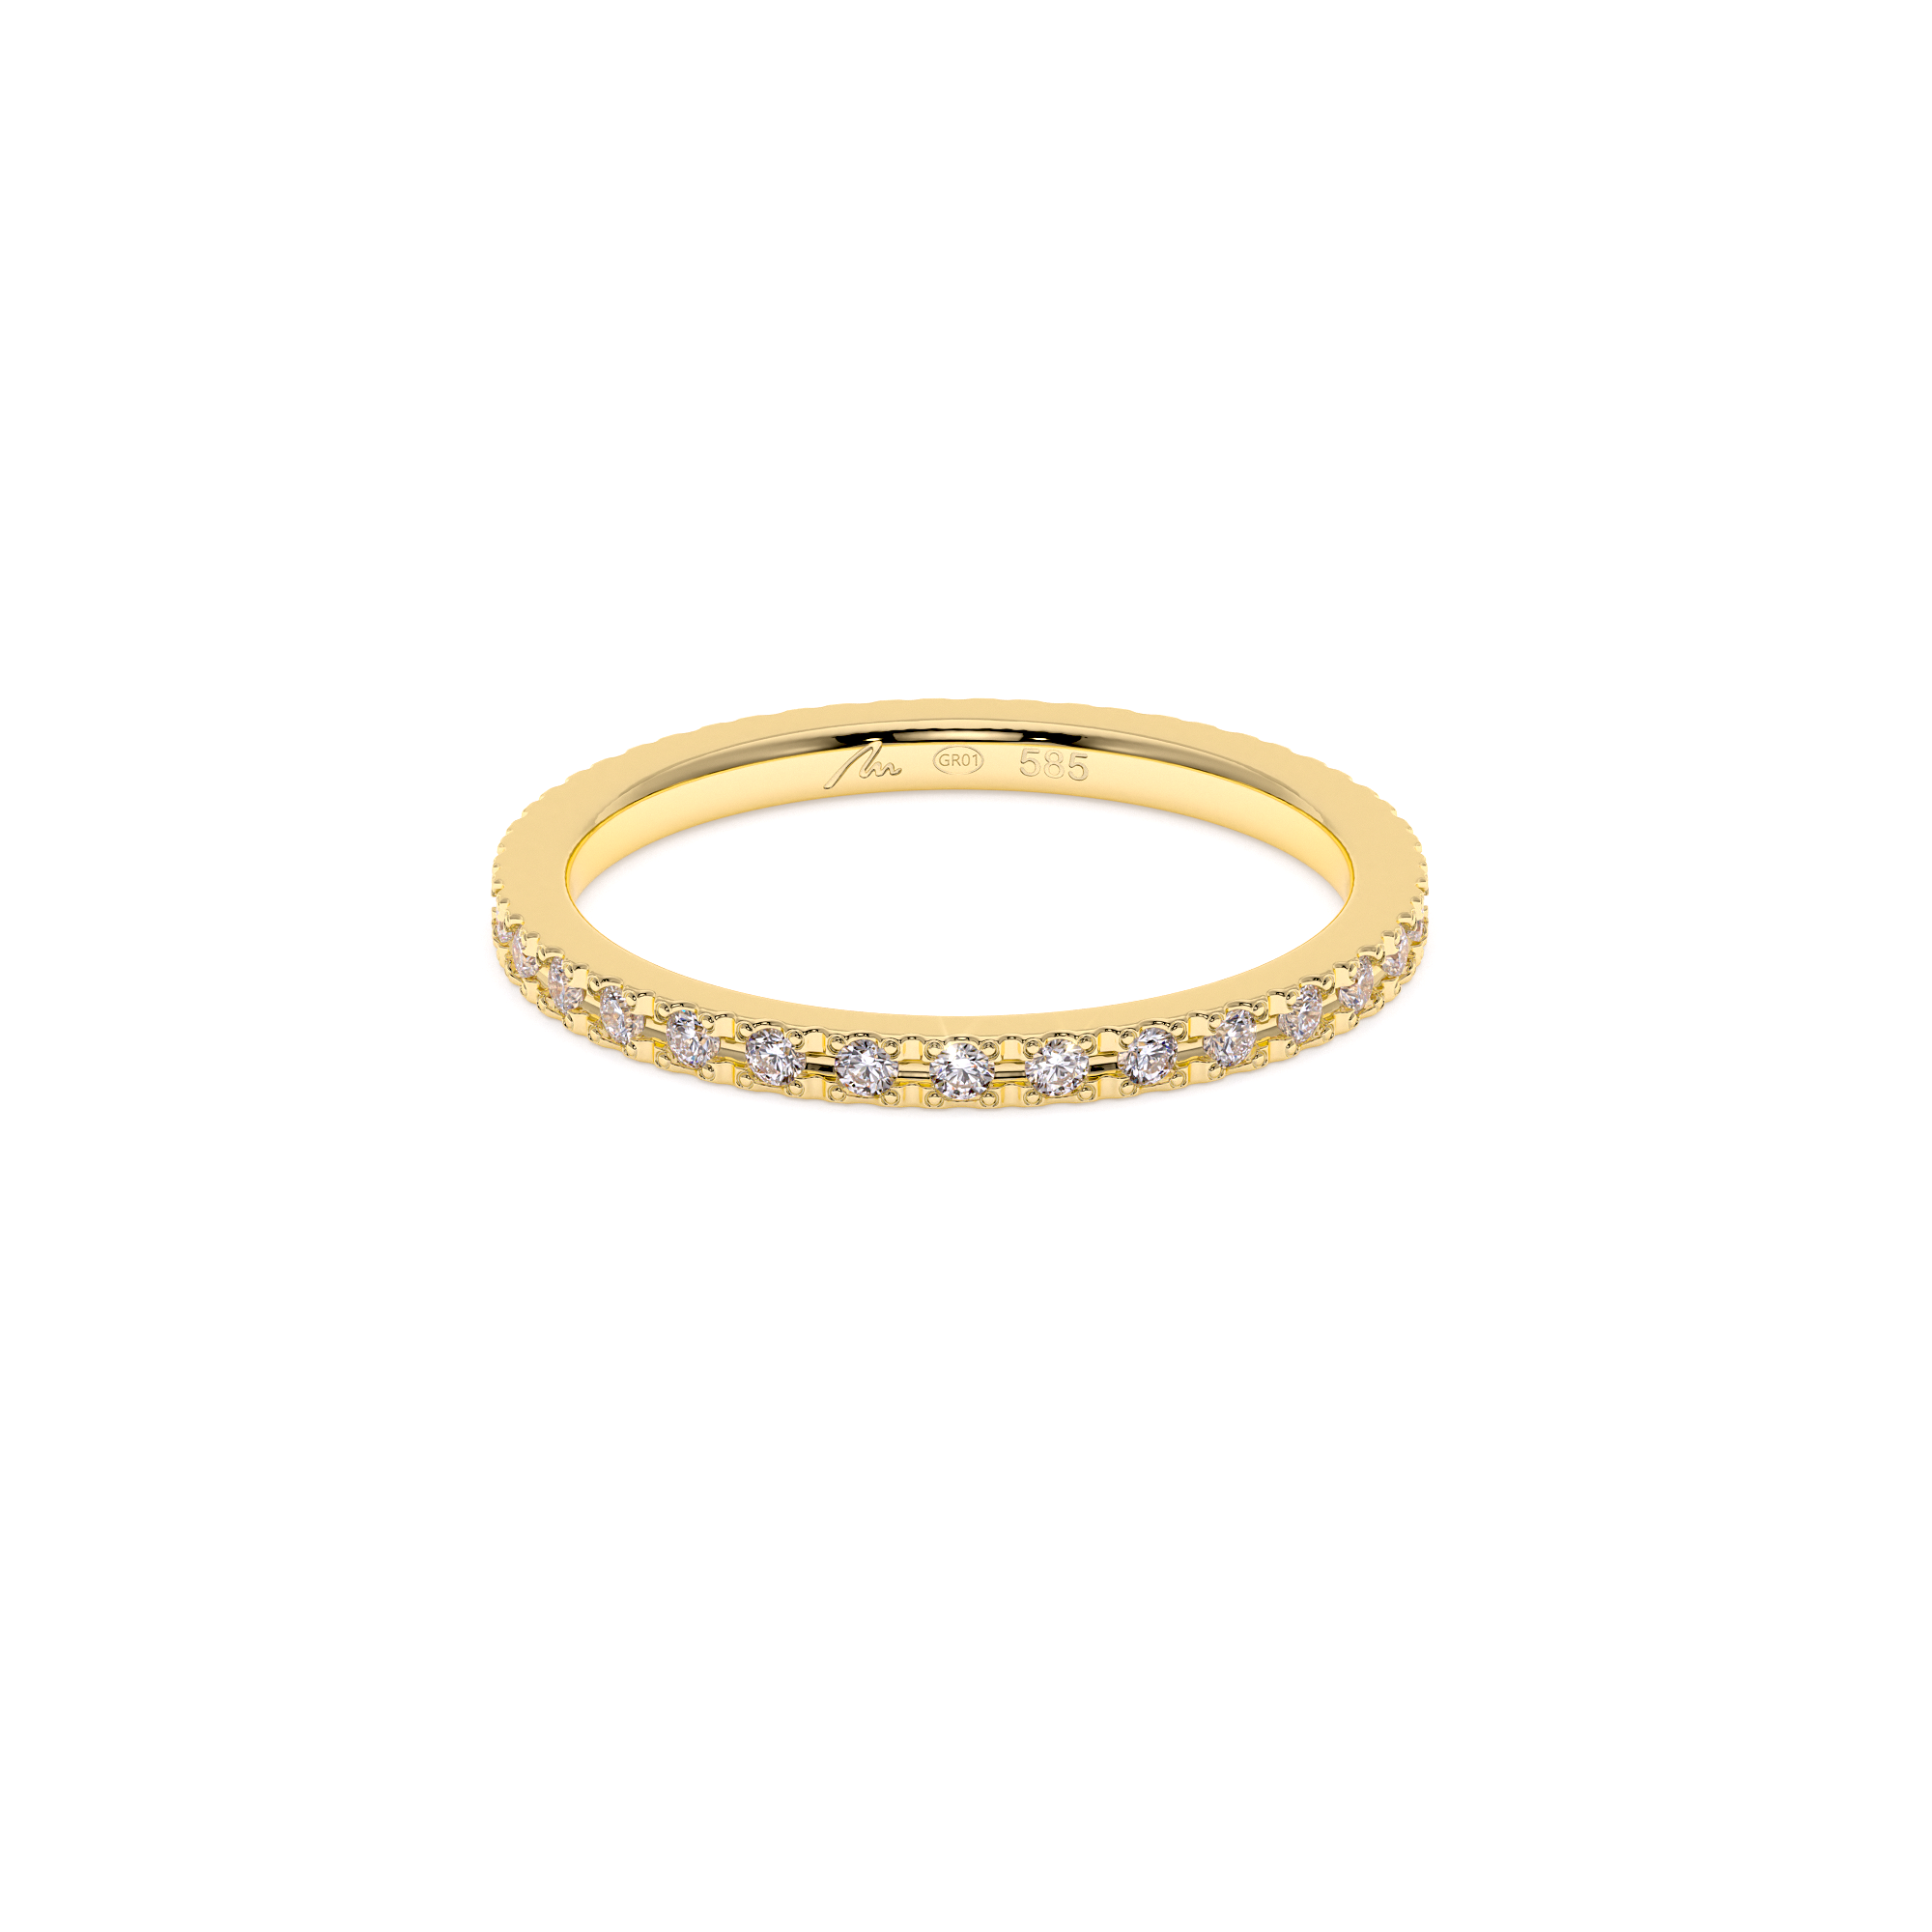 14 k yellow gold Tennis ring with 0.15 CT white diamonds